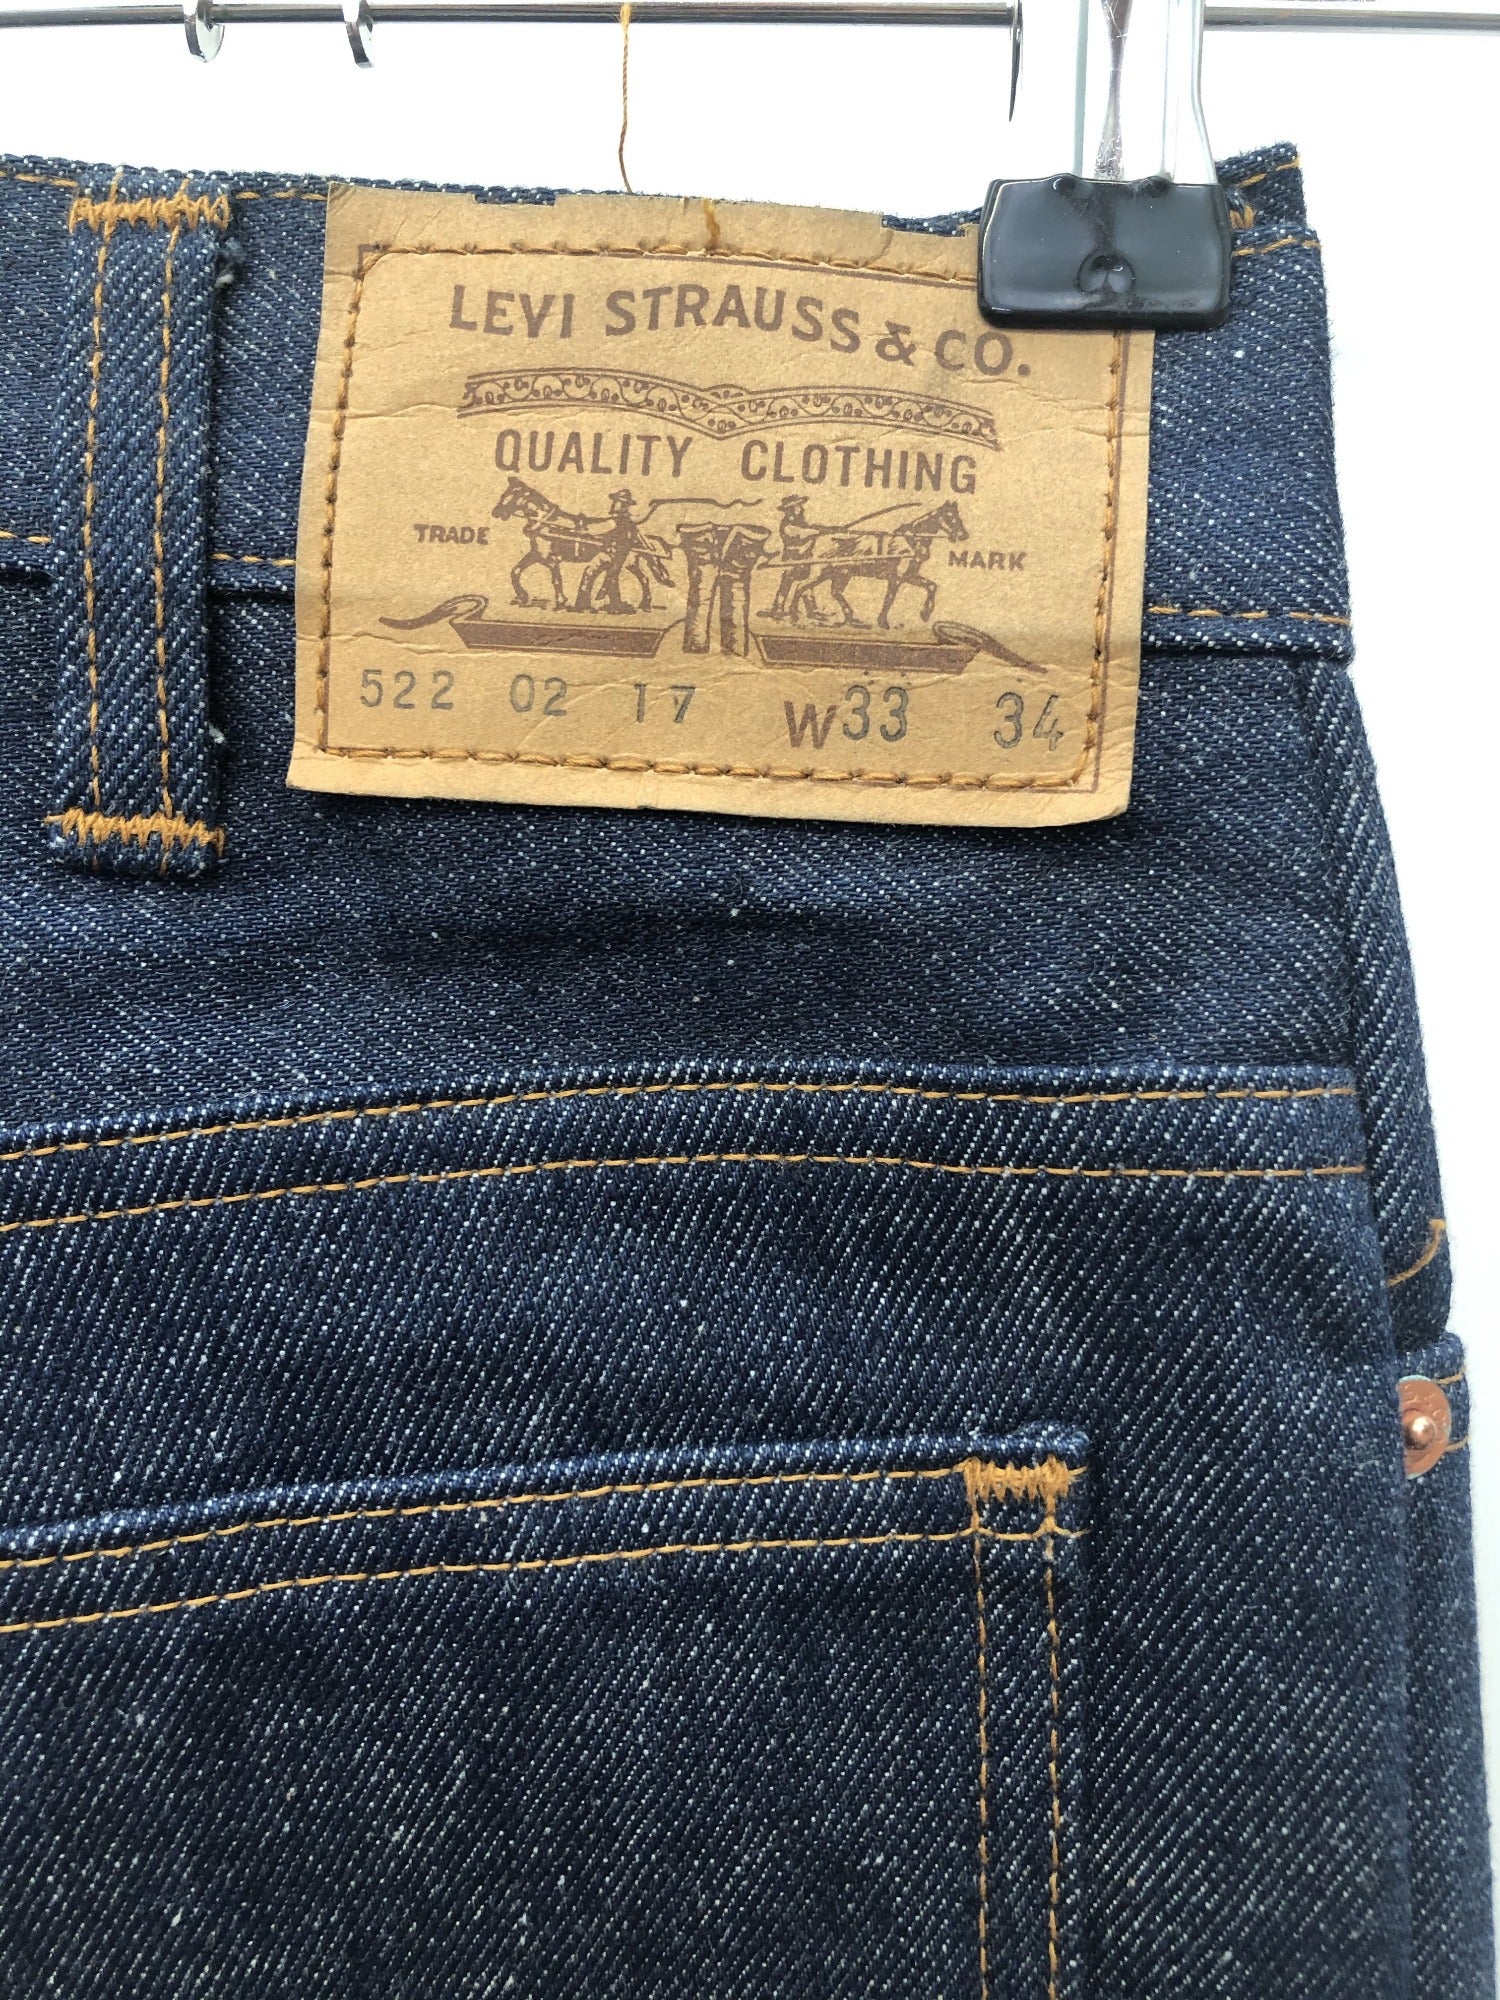 wide leg  white tab  W33  vintage  Urban Village Vintage  pockets  mens  Logo design  logo  levis strauss  levis  levi strauss  L34  L  jean  blue